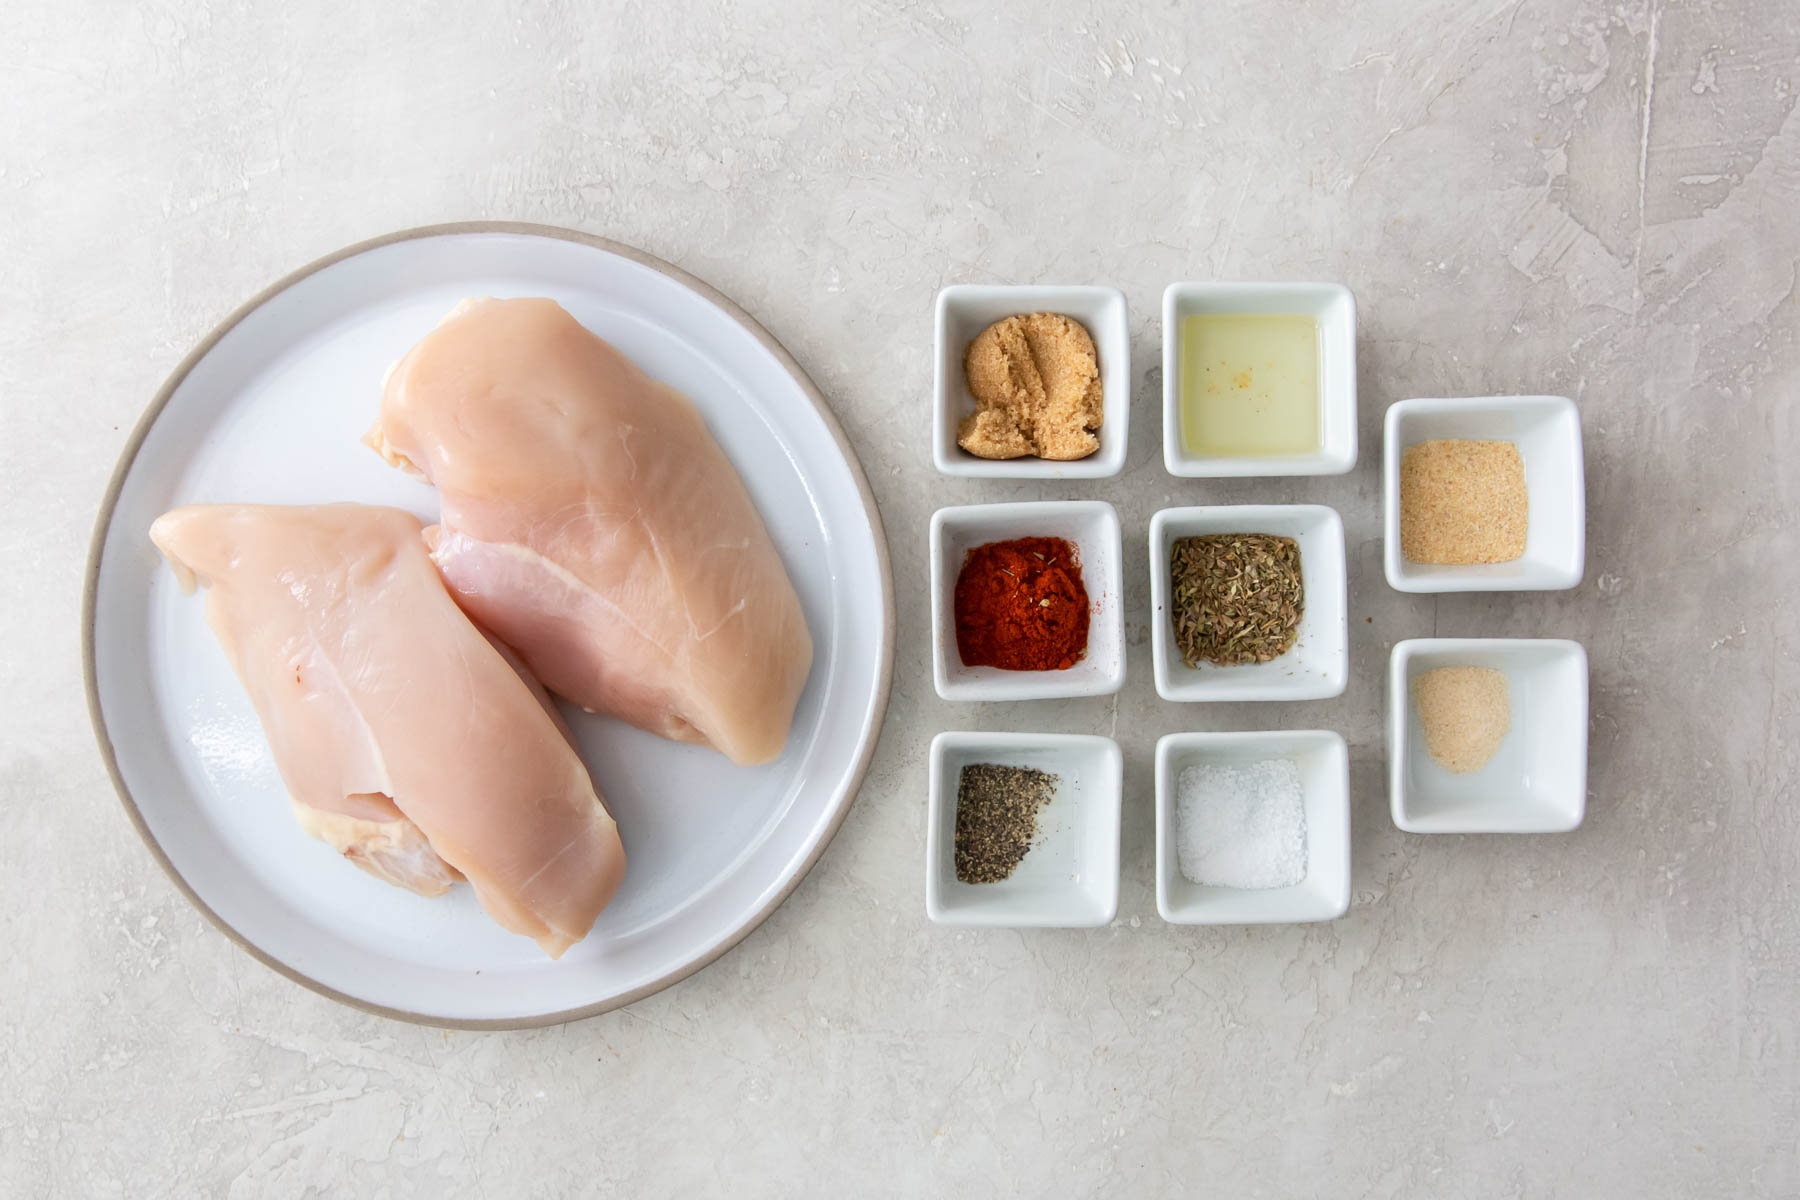 Ingredients for air fryer chicken breast recipe.